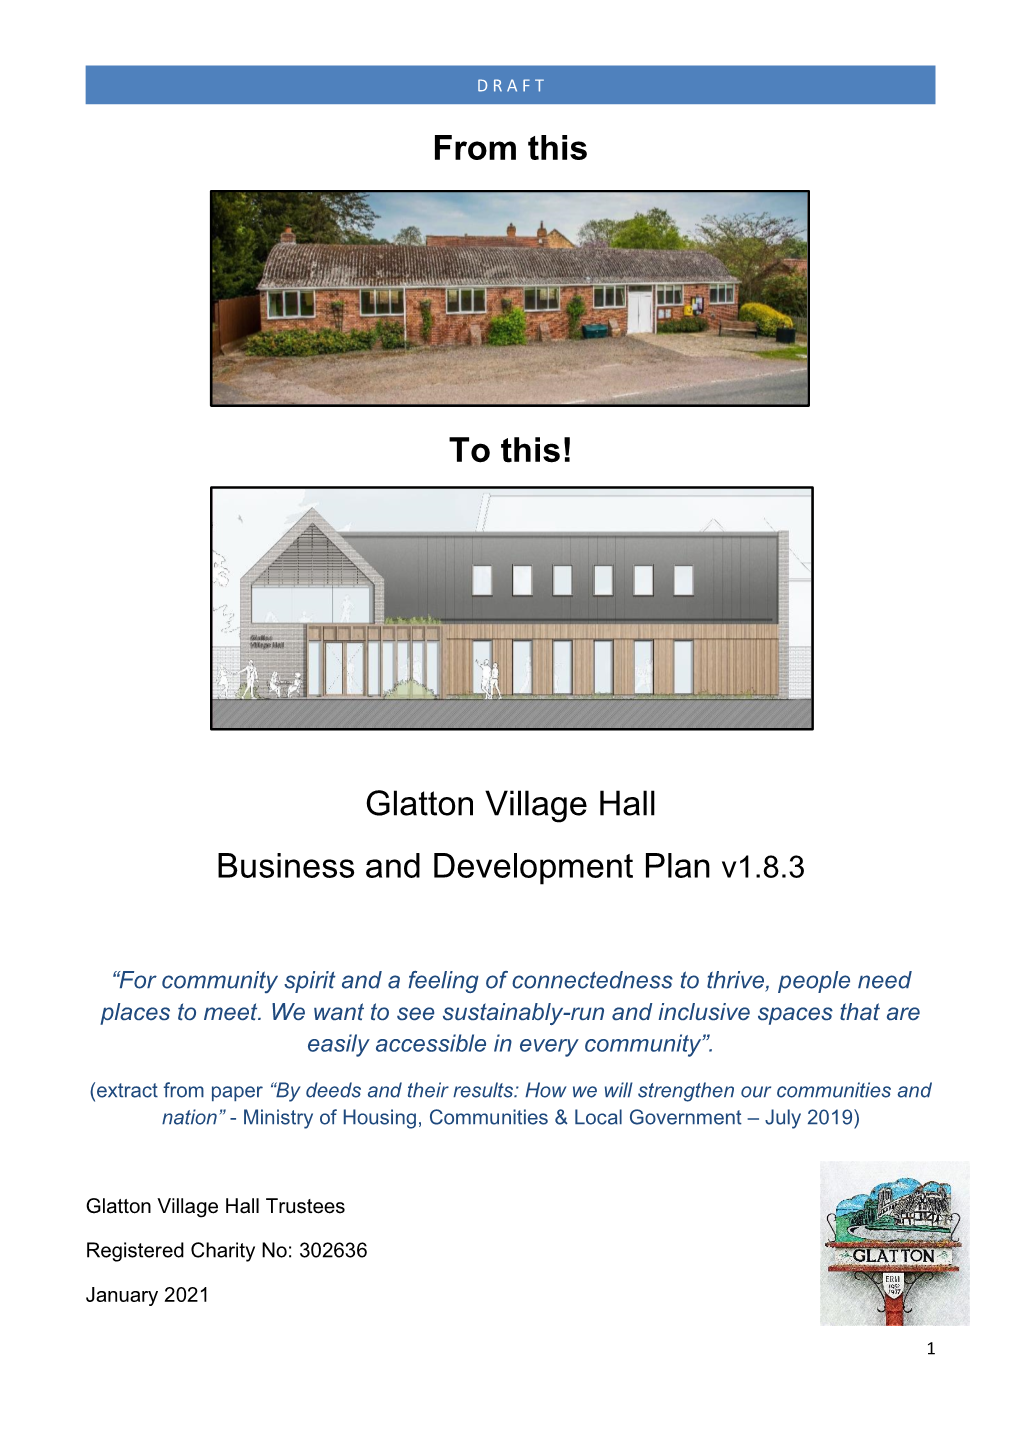 Glatton Village Hall DRAFT Development & Business Plan V1.8.3